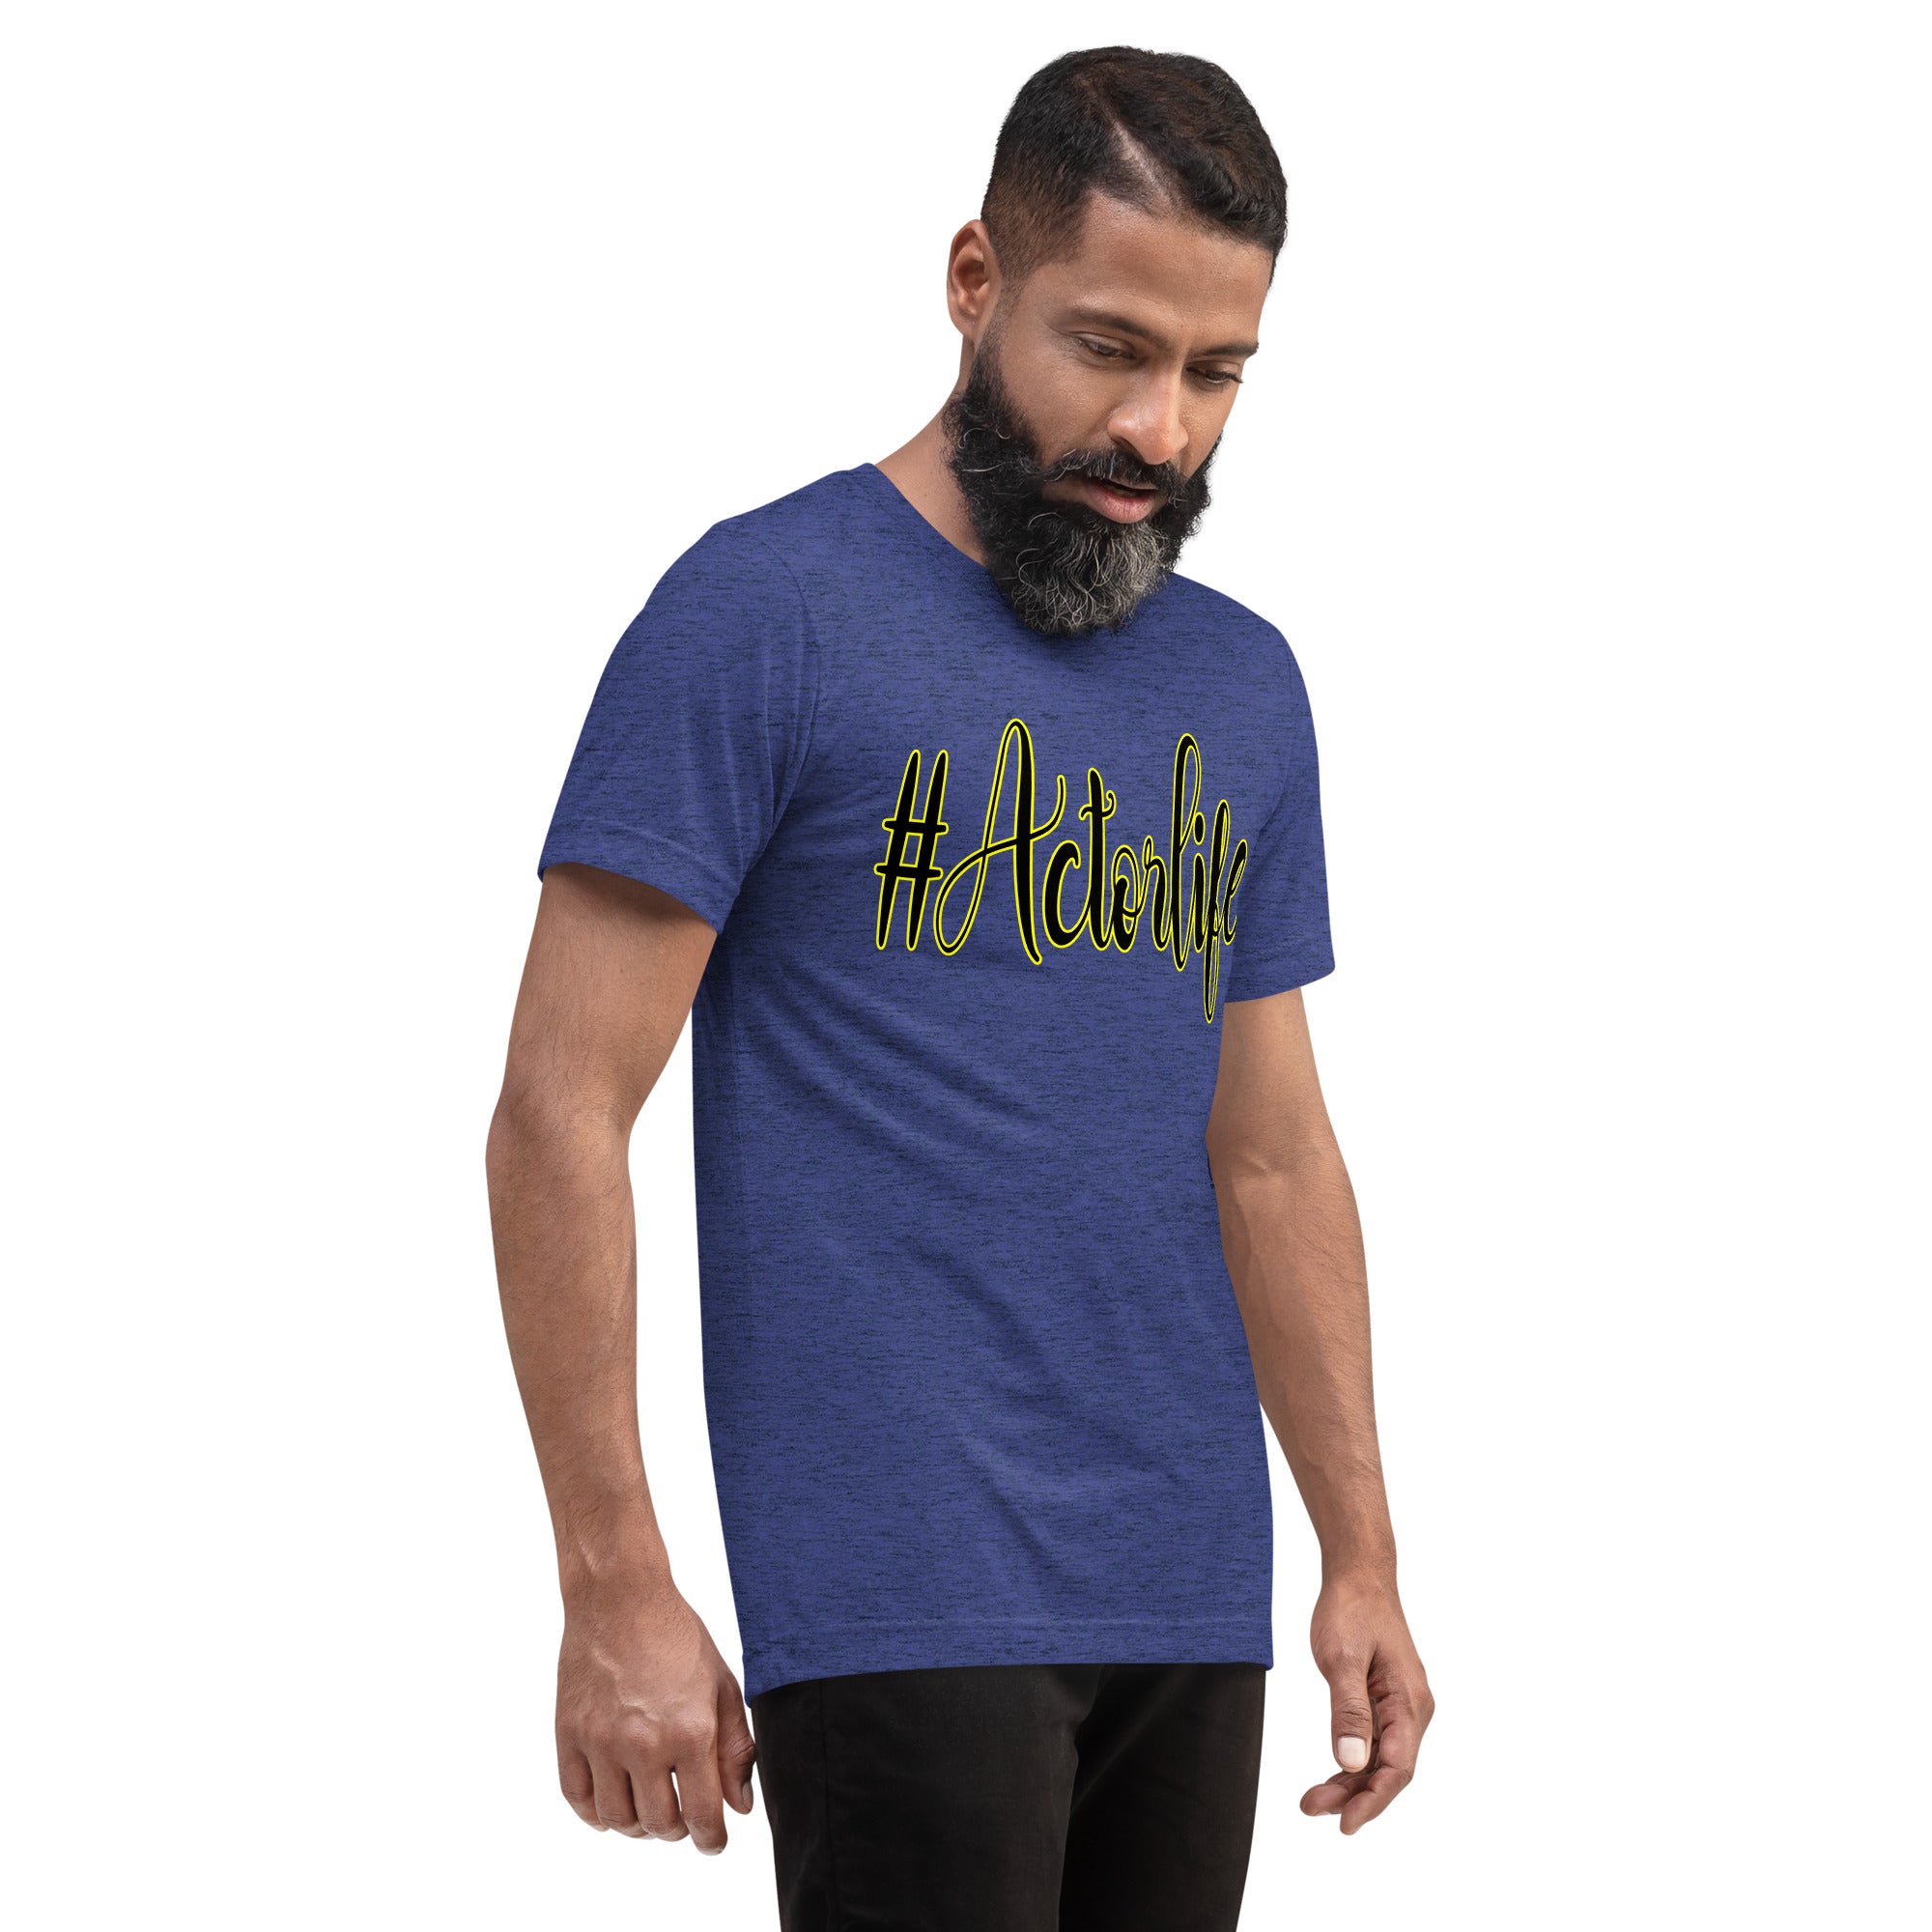 #Actorlife - Premium Tri-blend Short-Sleeve Unisex T-shirt